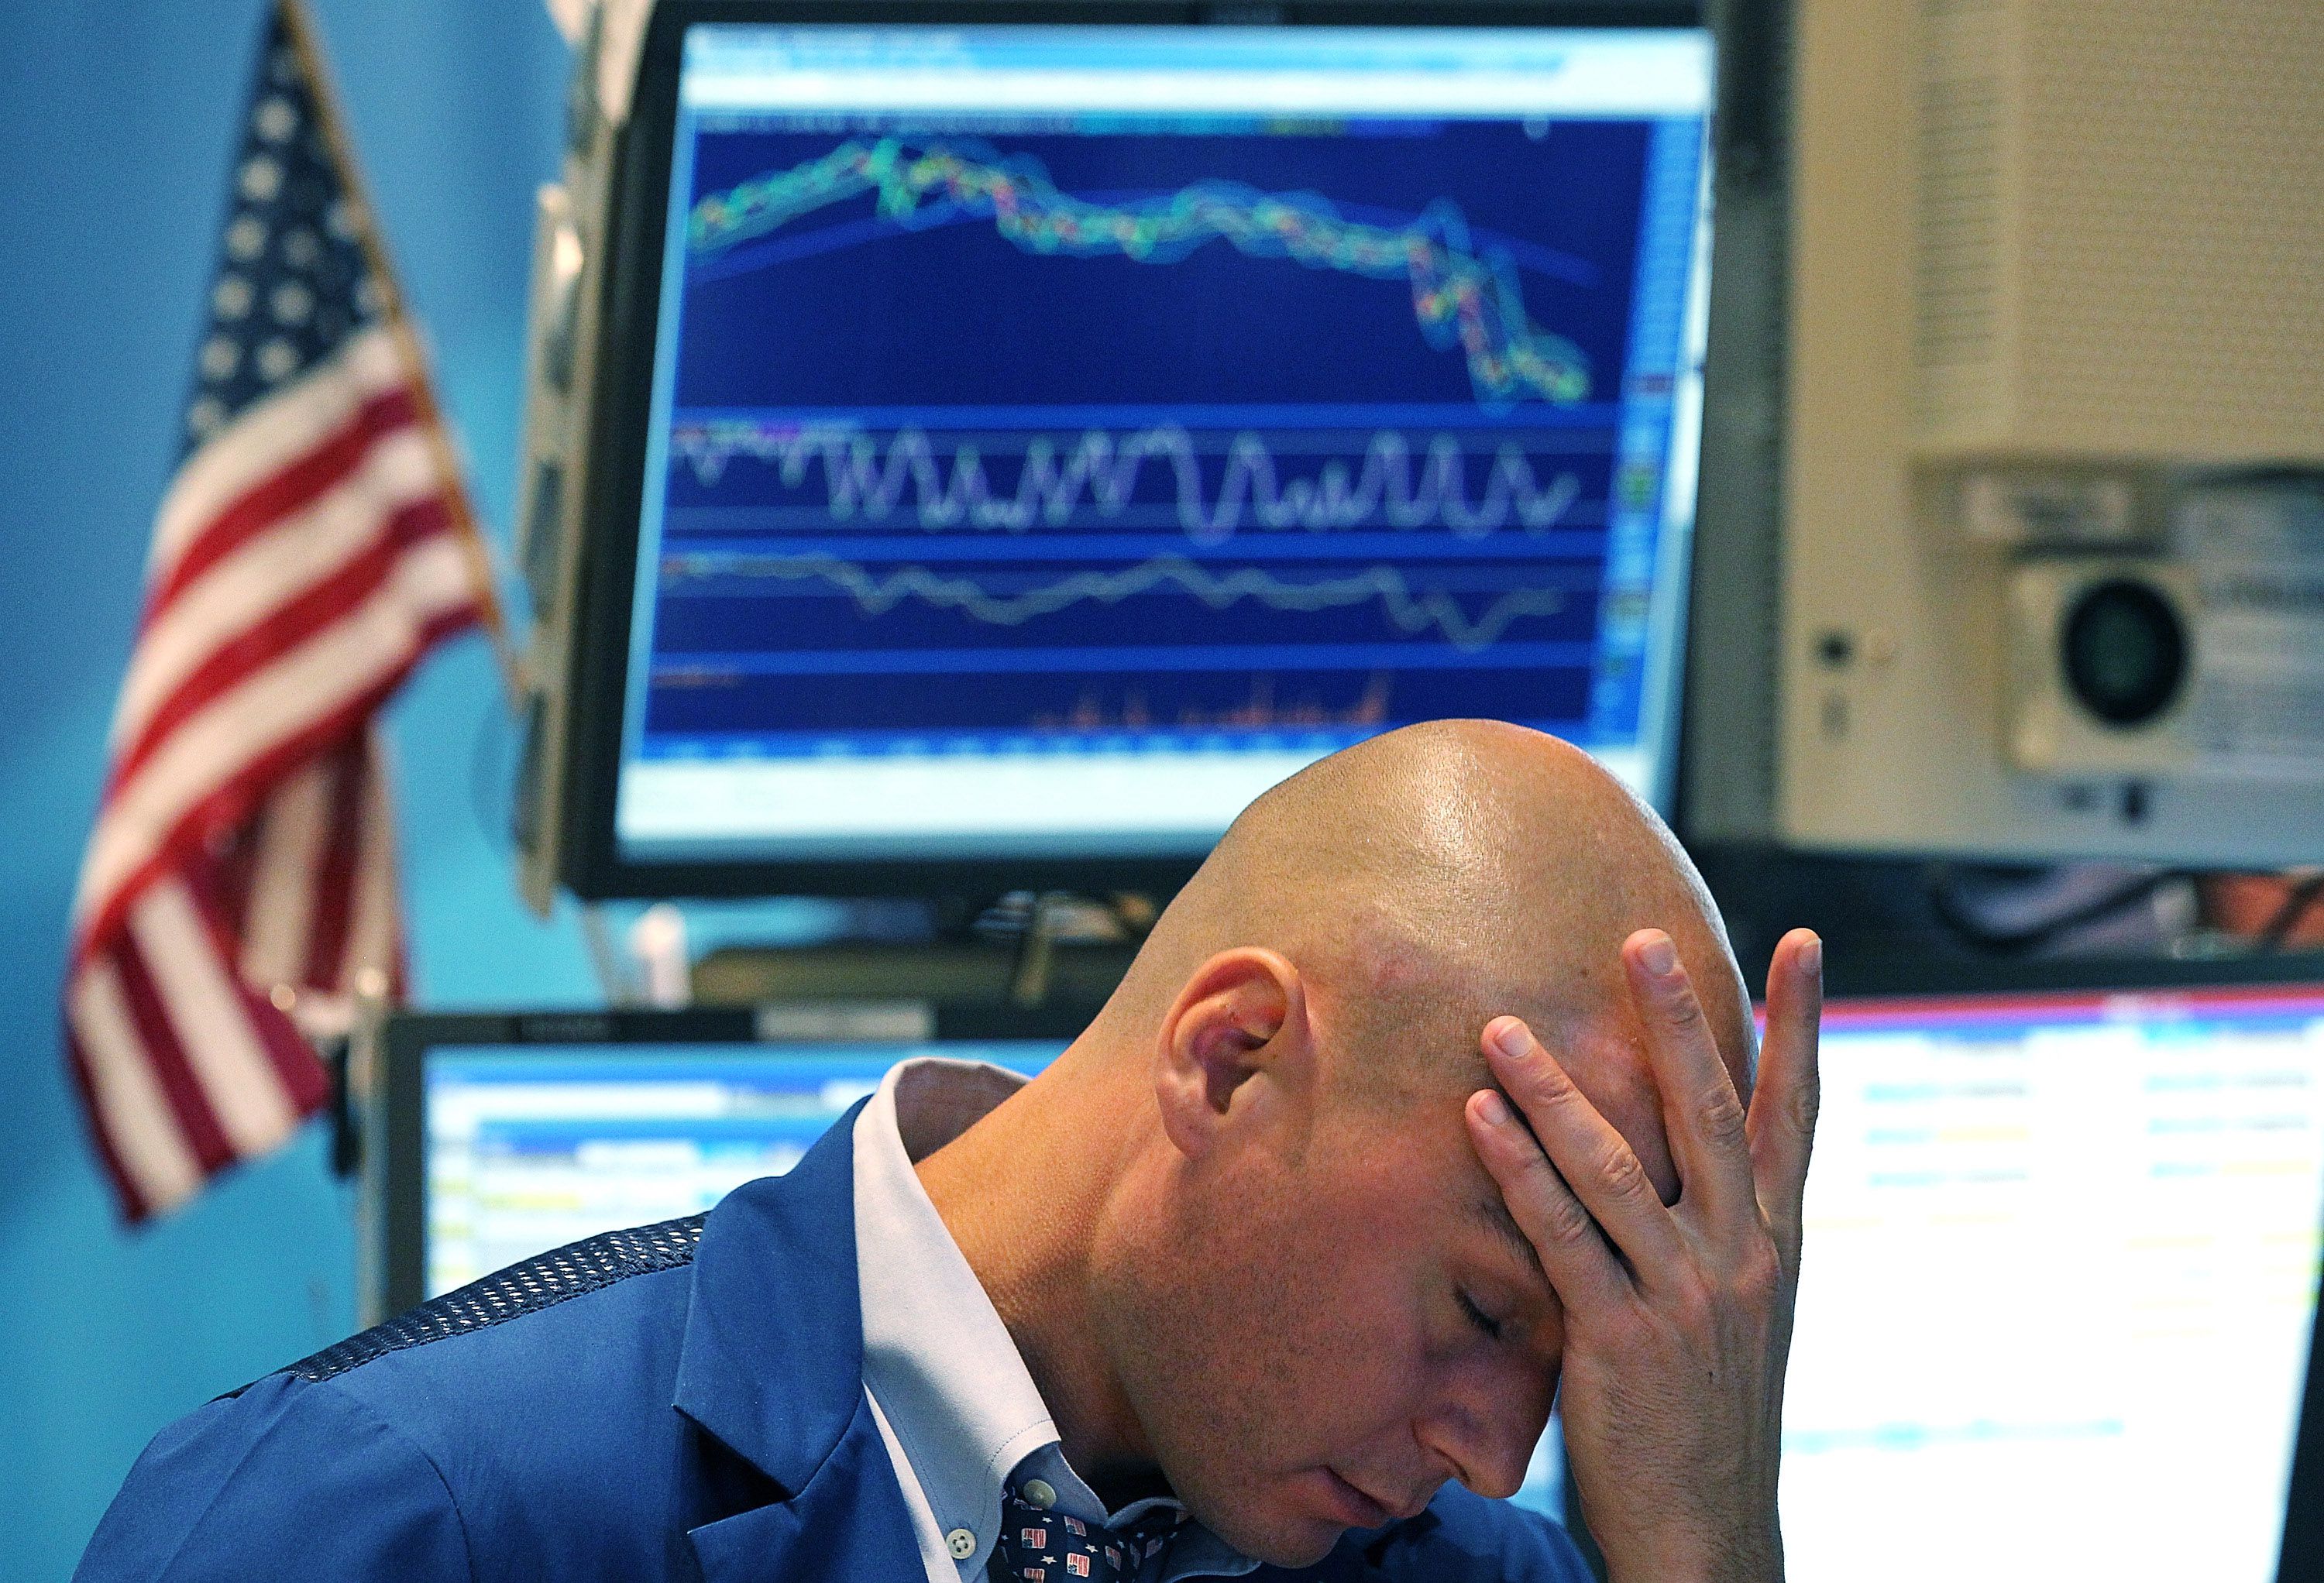 "La burbuja va a explotar": Se avecina una crisis económica "mucho más dolorosa" que la del 2008 10